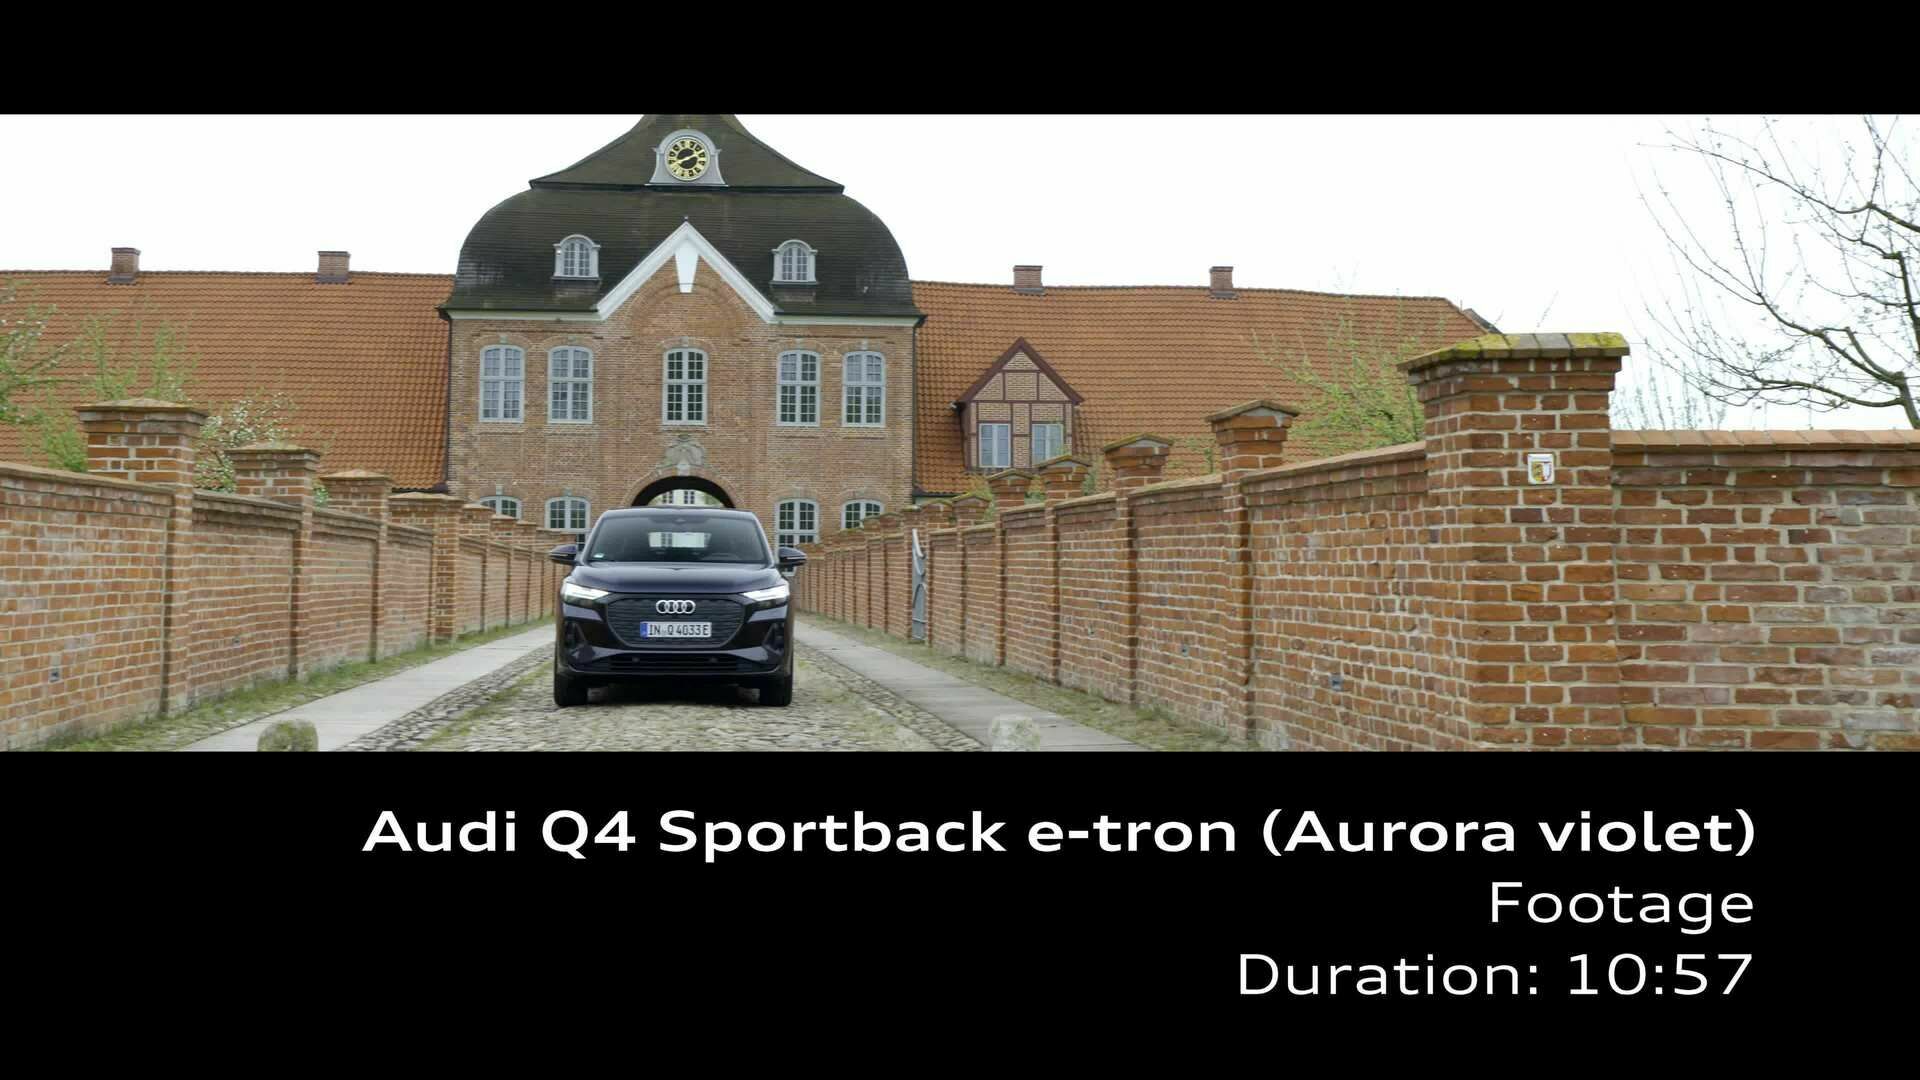 Footage: Audi Q4 Sportback e-tron – Auroraviolett